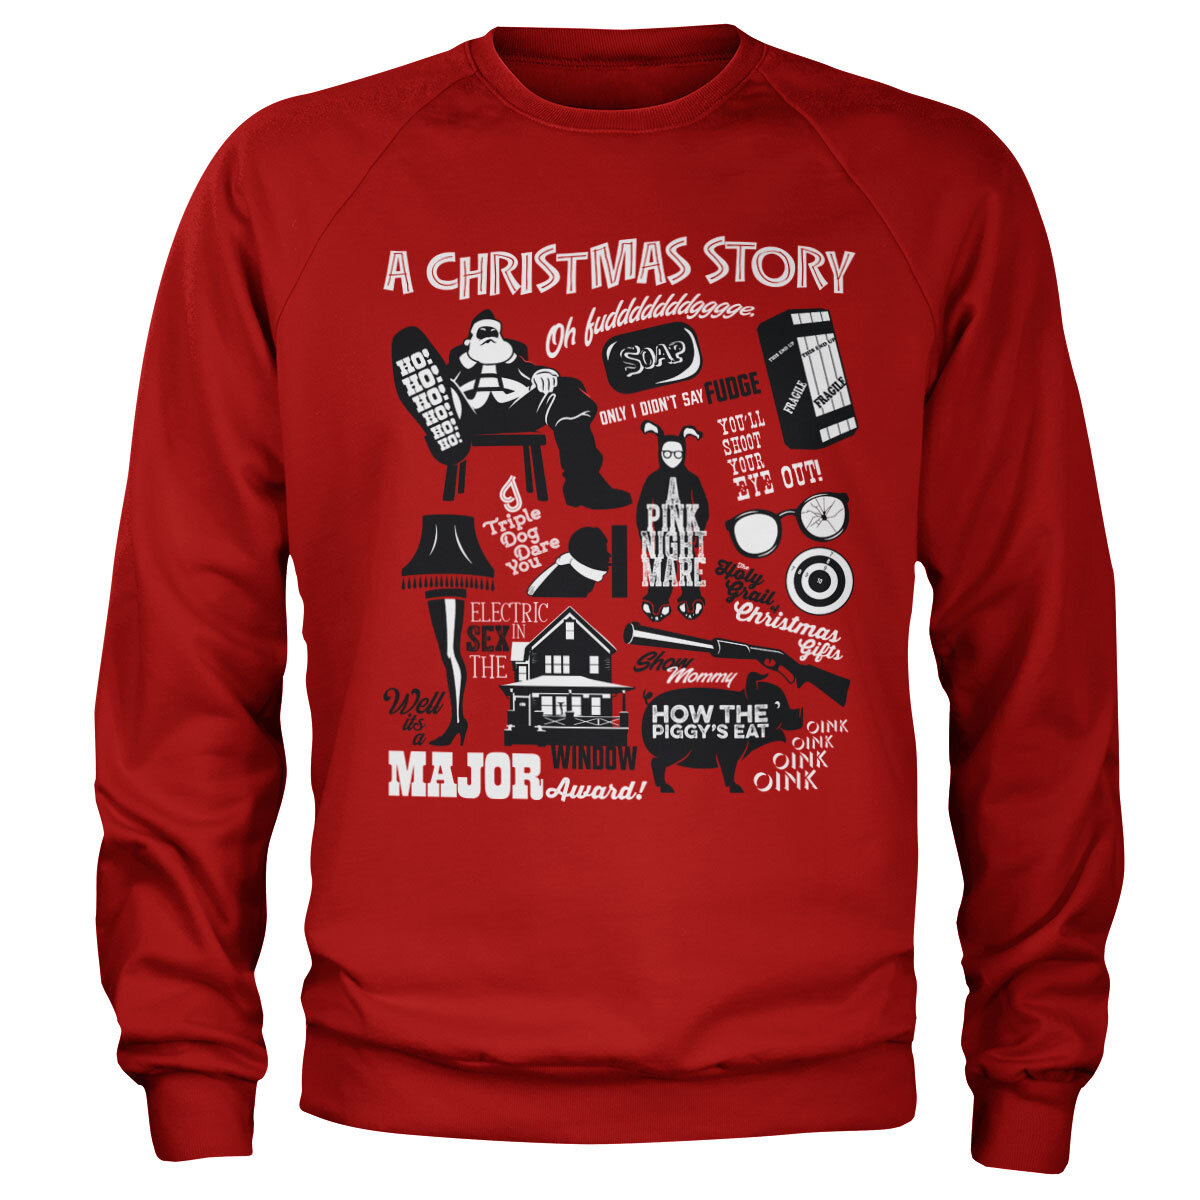 A Christmas Story icons Sweatshirt